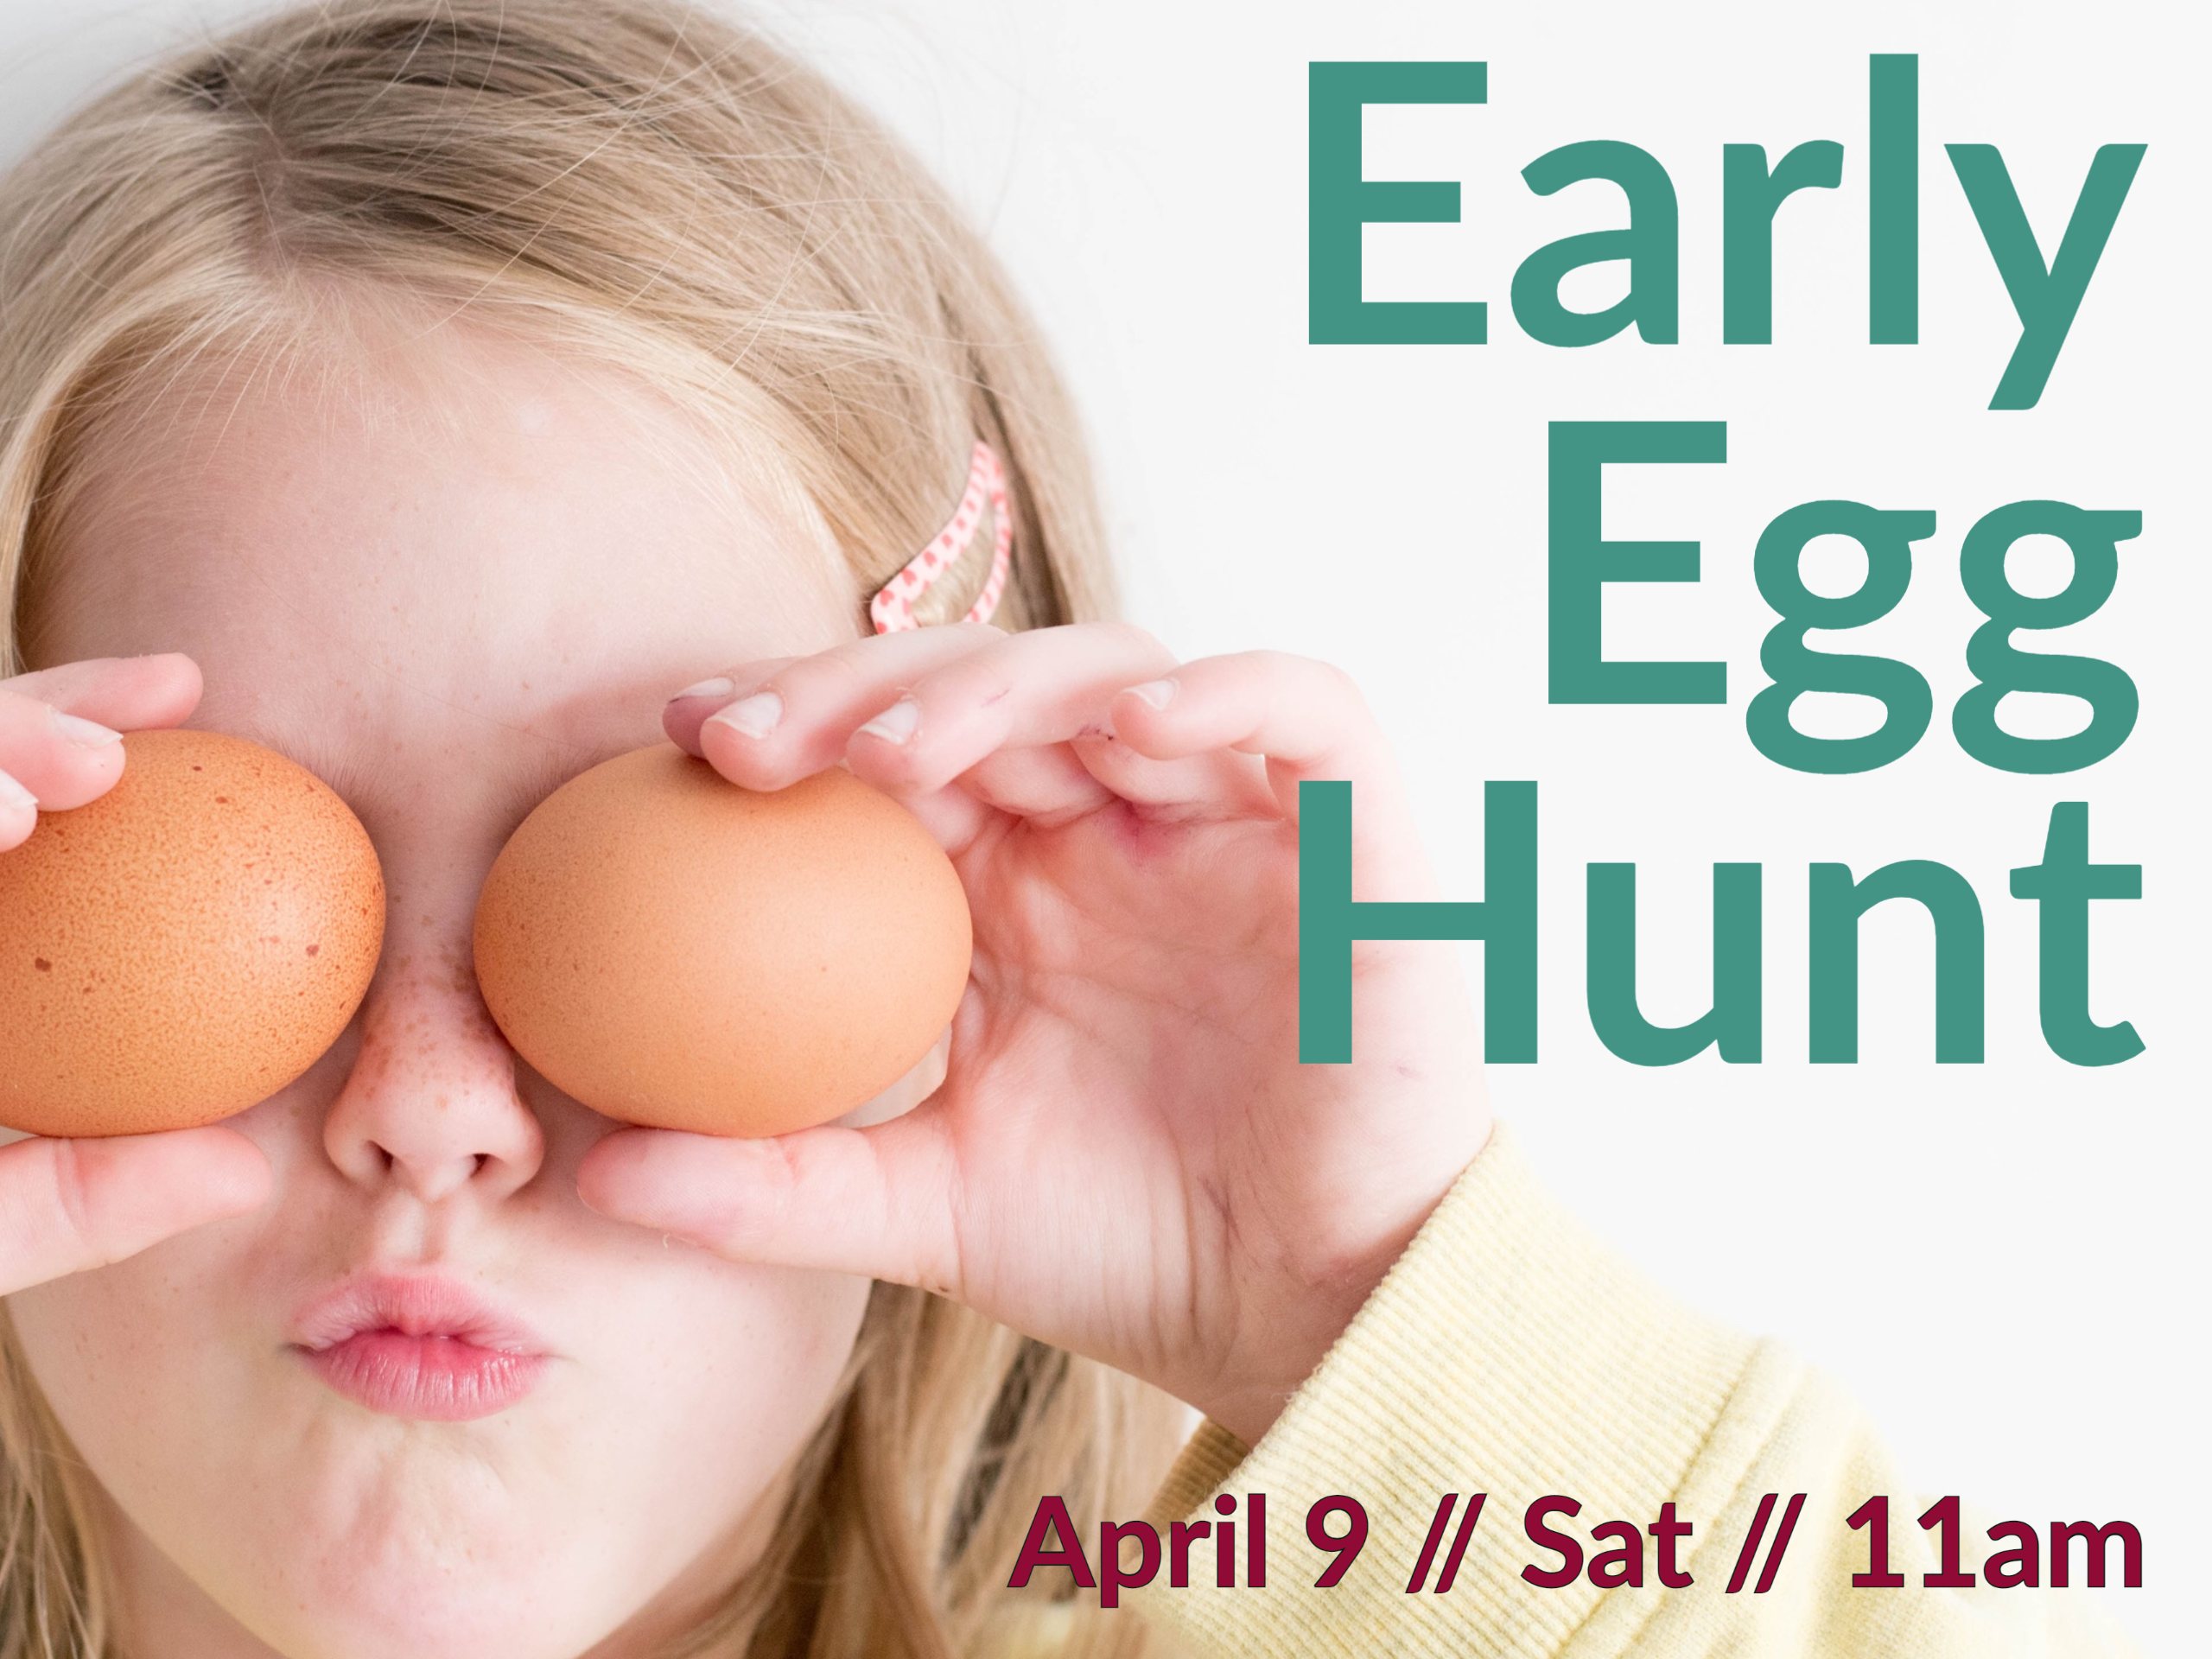 Egg Hunt ad